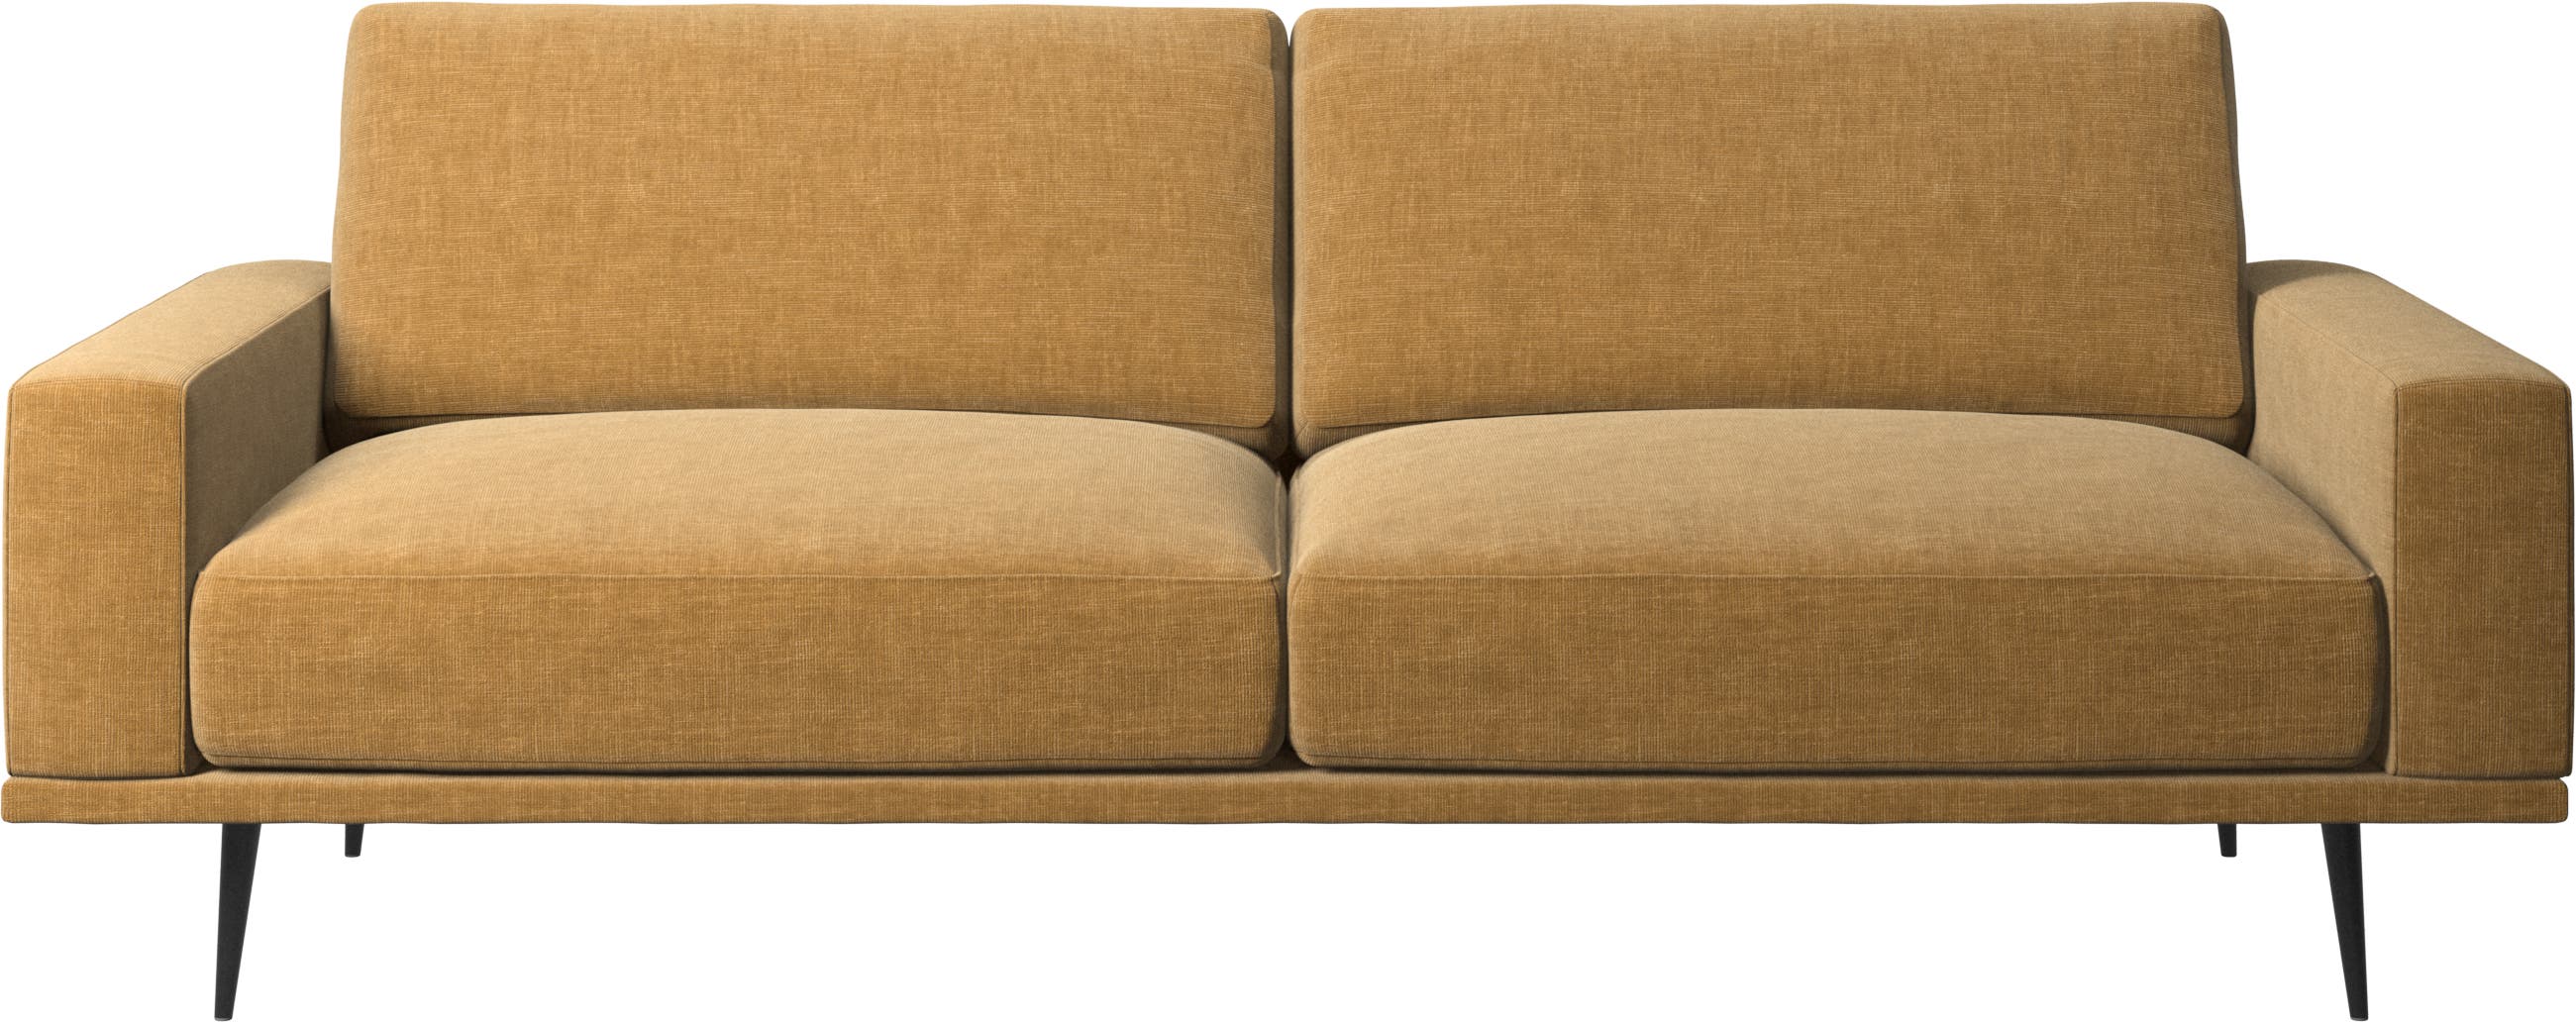 Carlton sofa